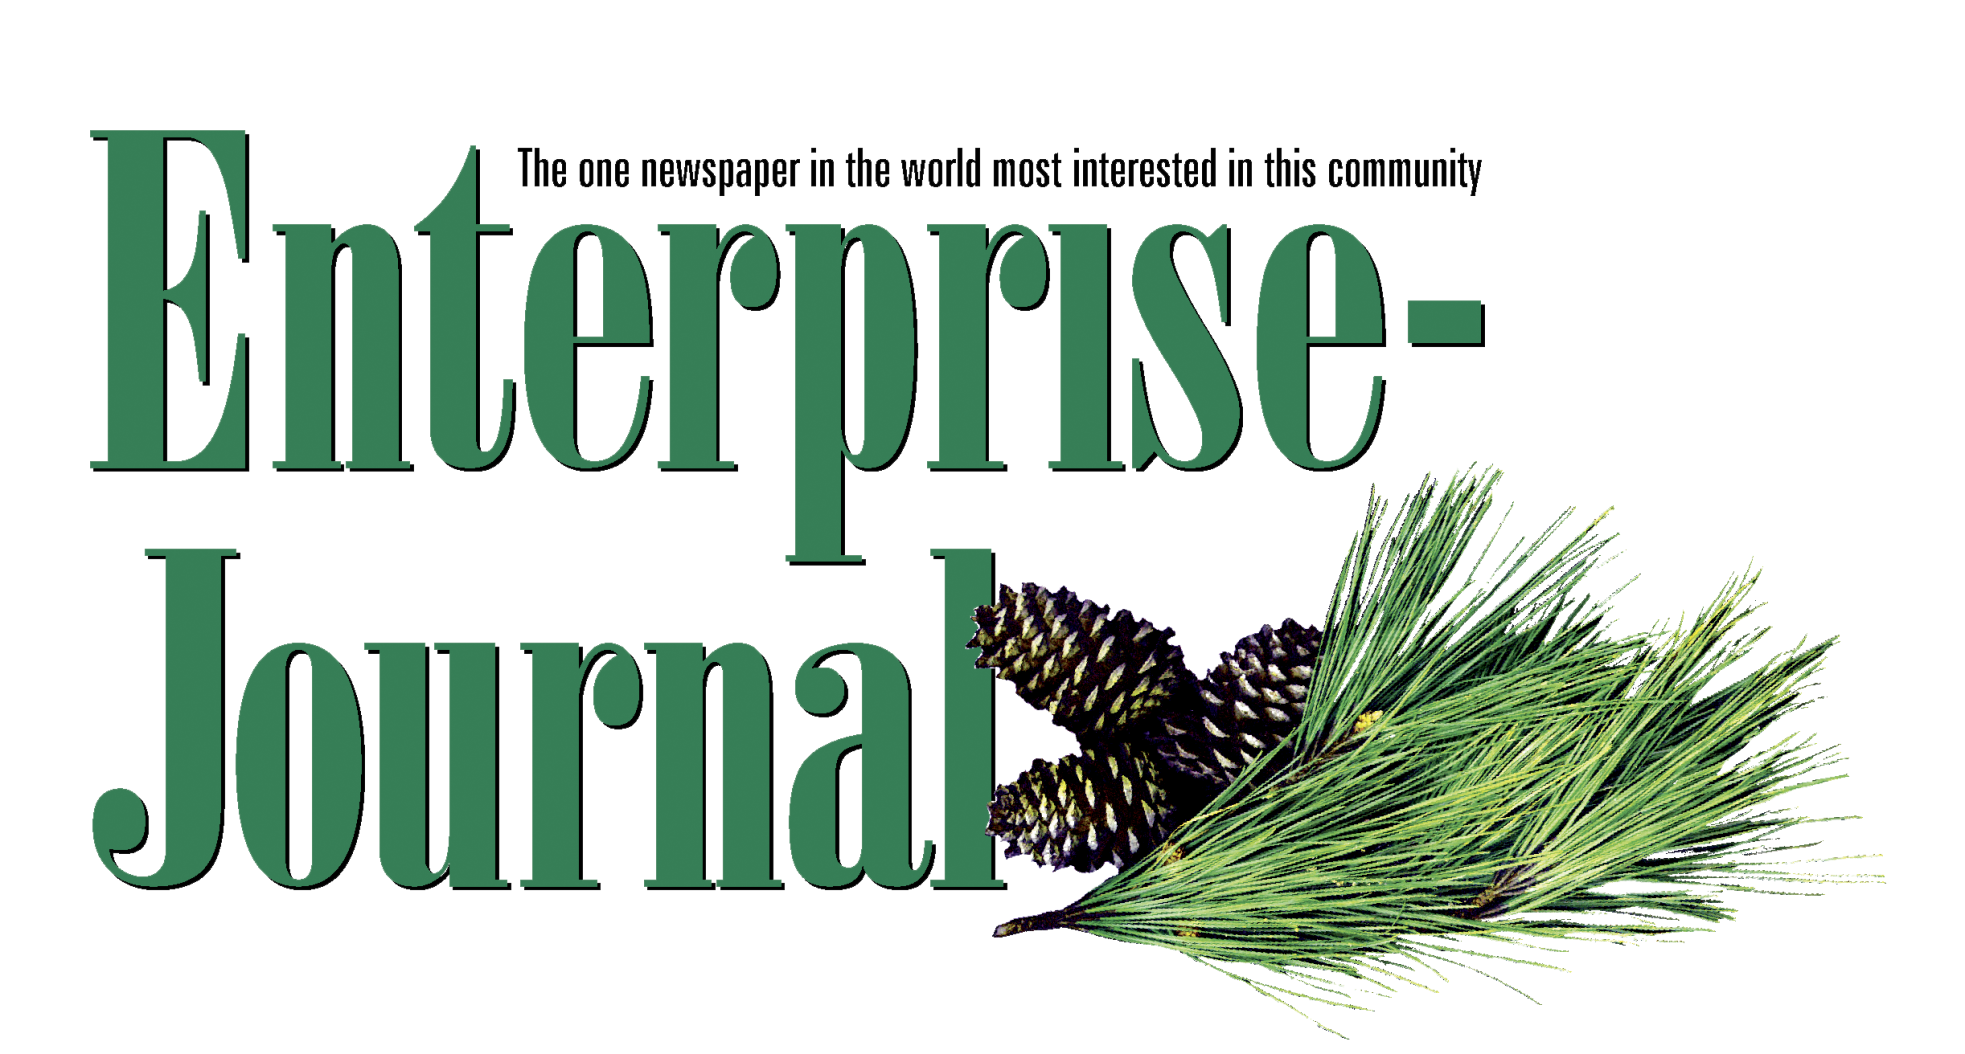 enterprise journal progressed eyed